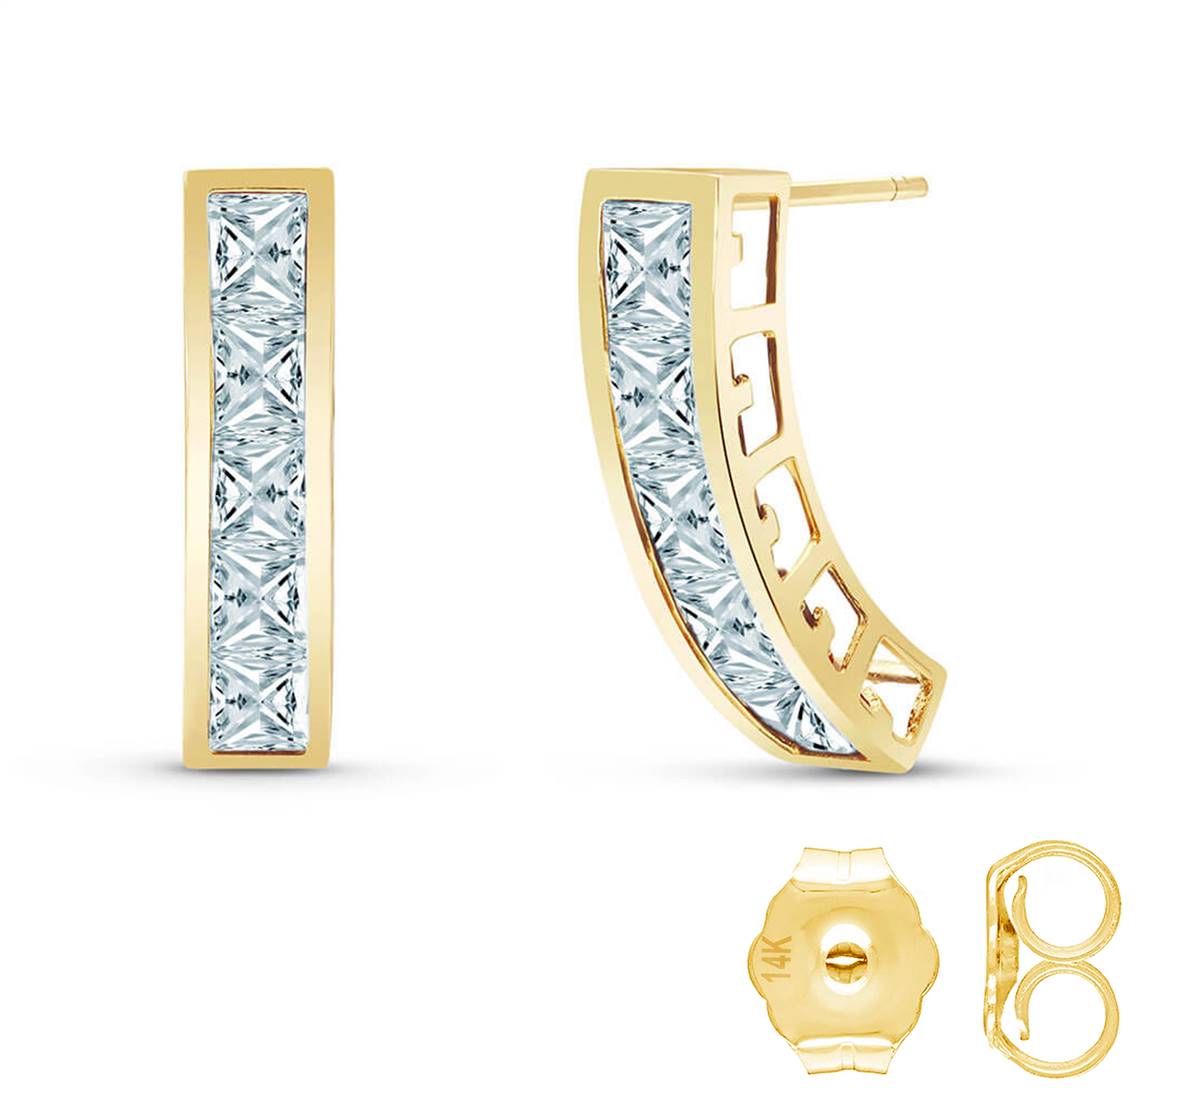 4.5 Carat 14K Solid Yellow Gold Valerie Aquamarine Earrings